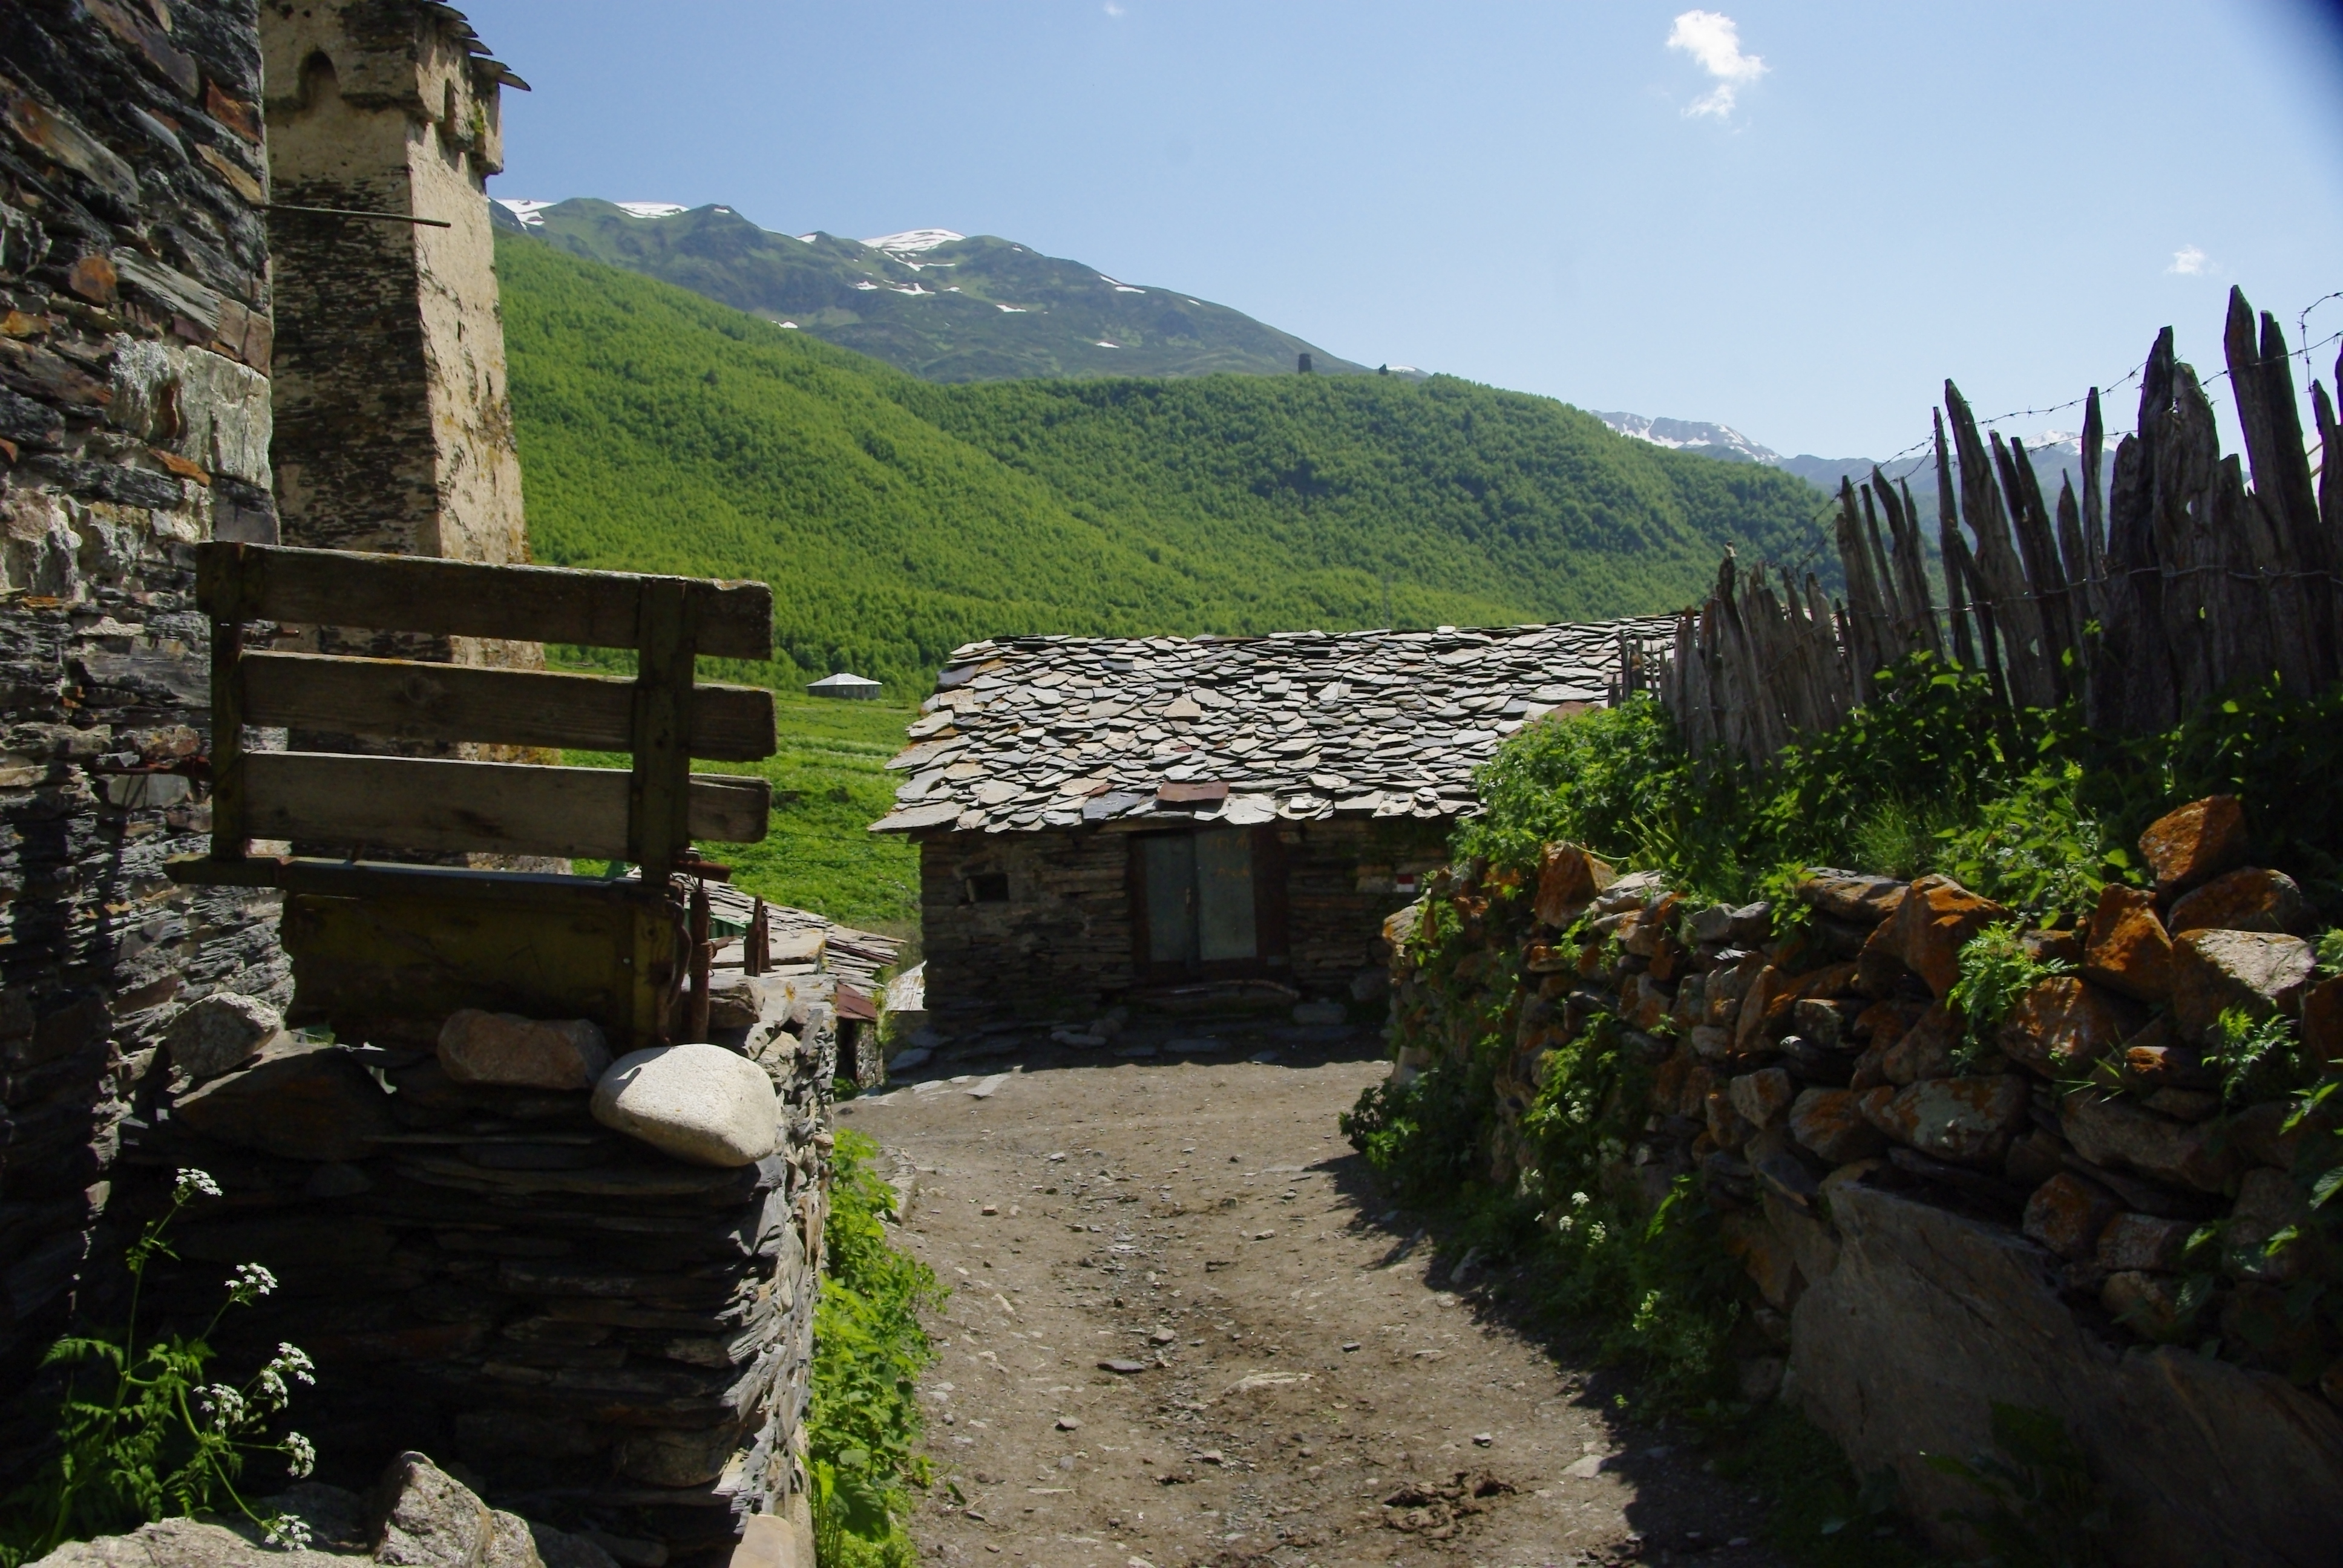 Ushguli – The Highest European Village